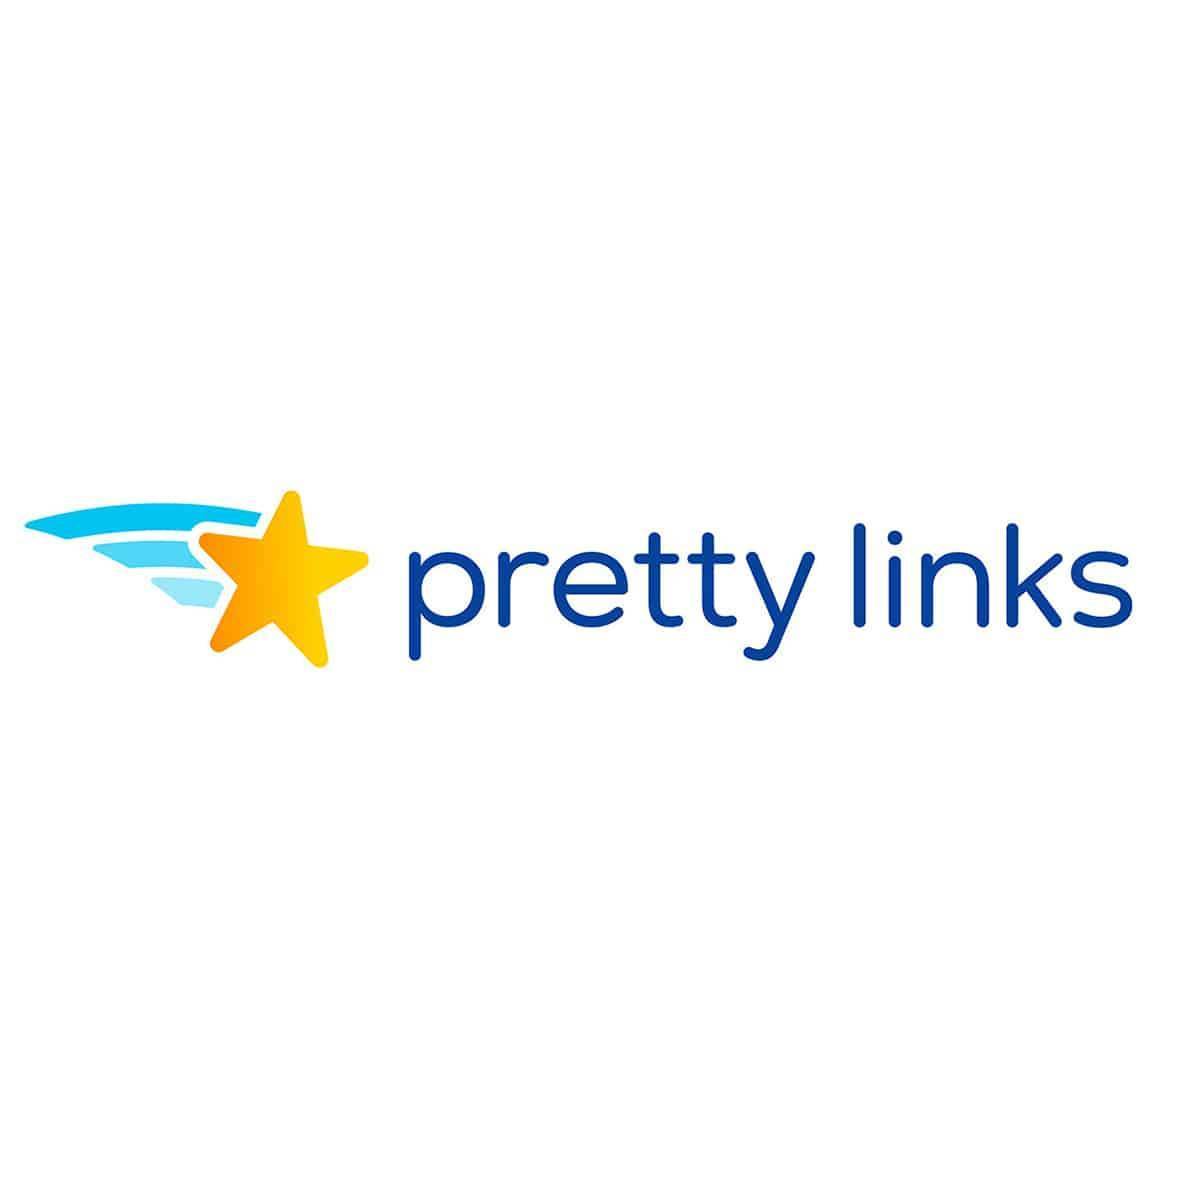 Pretty Links logo.